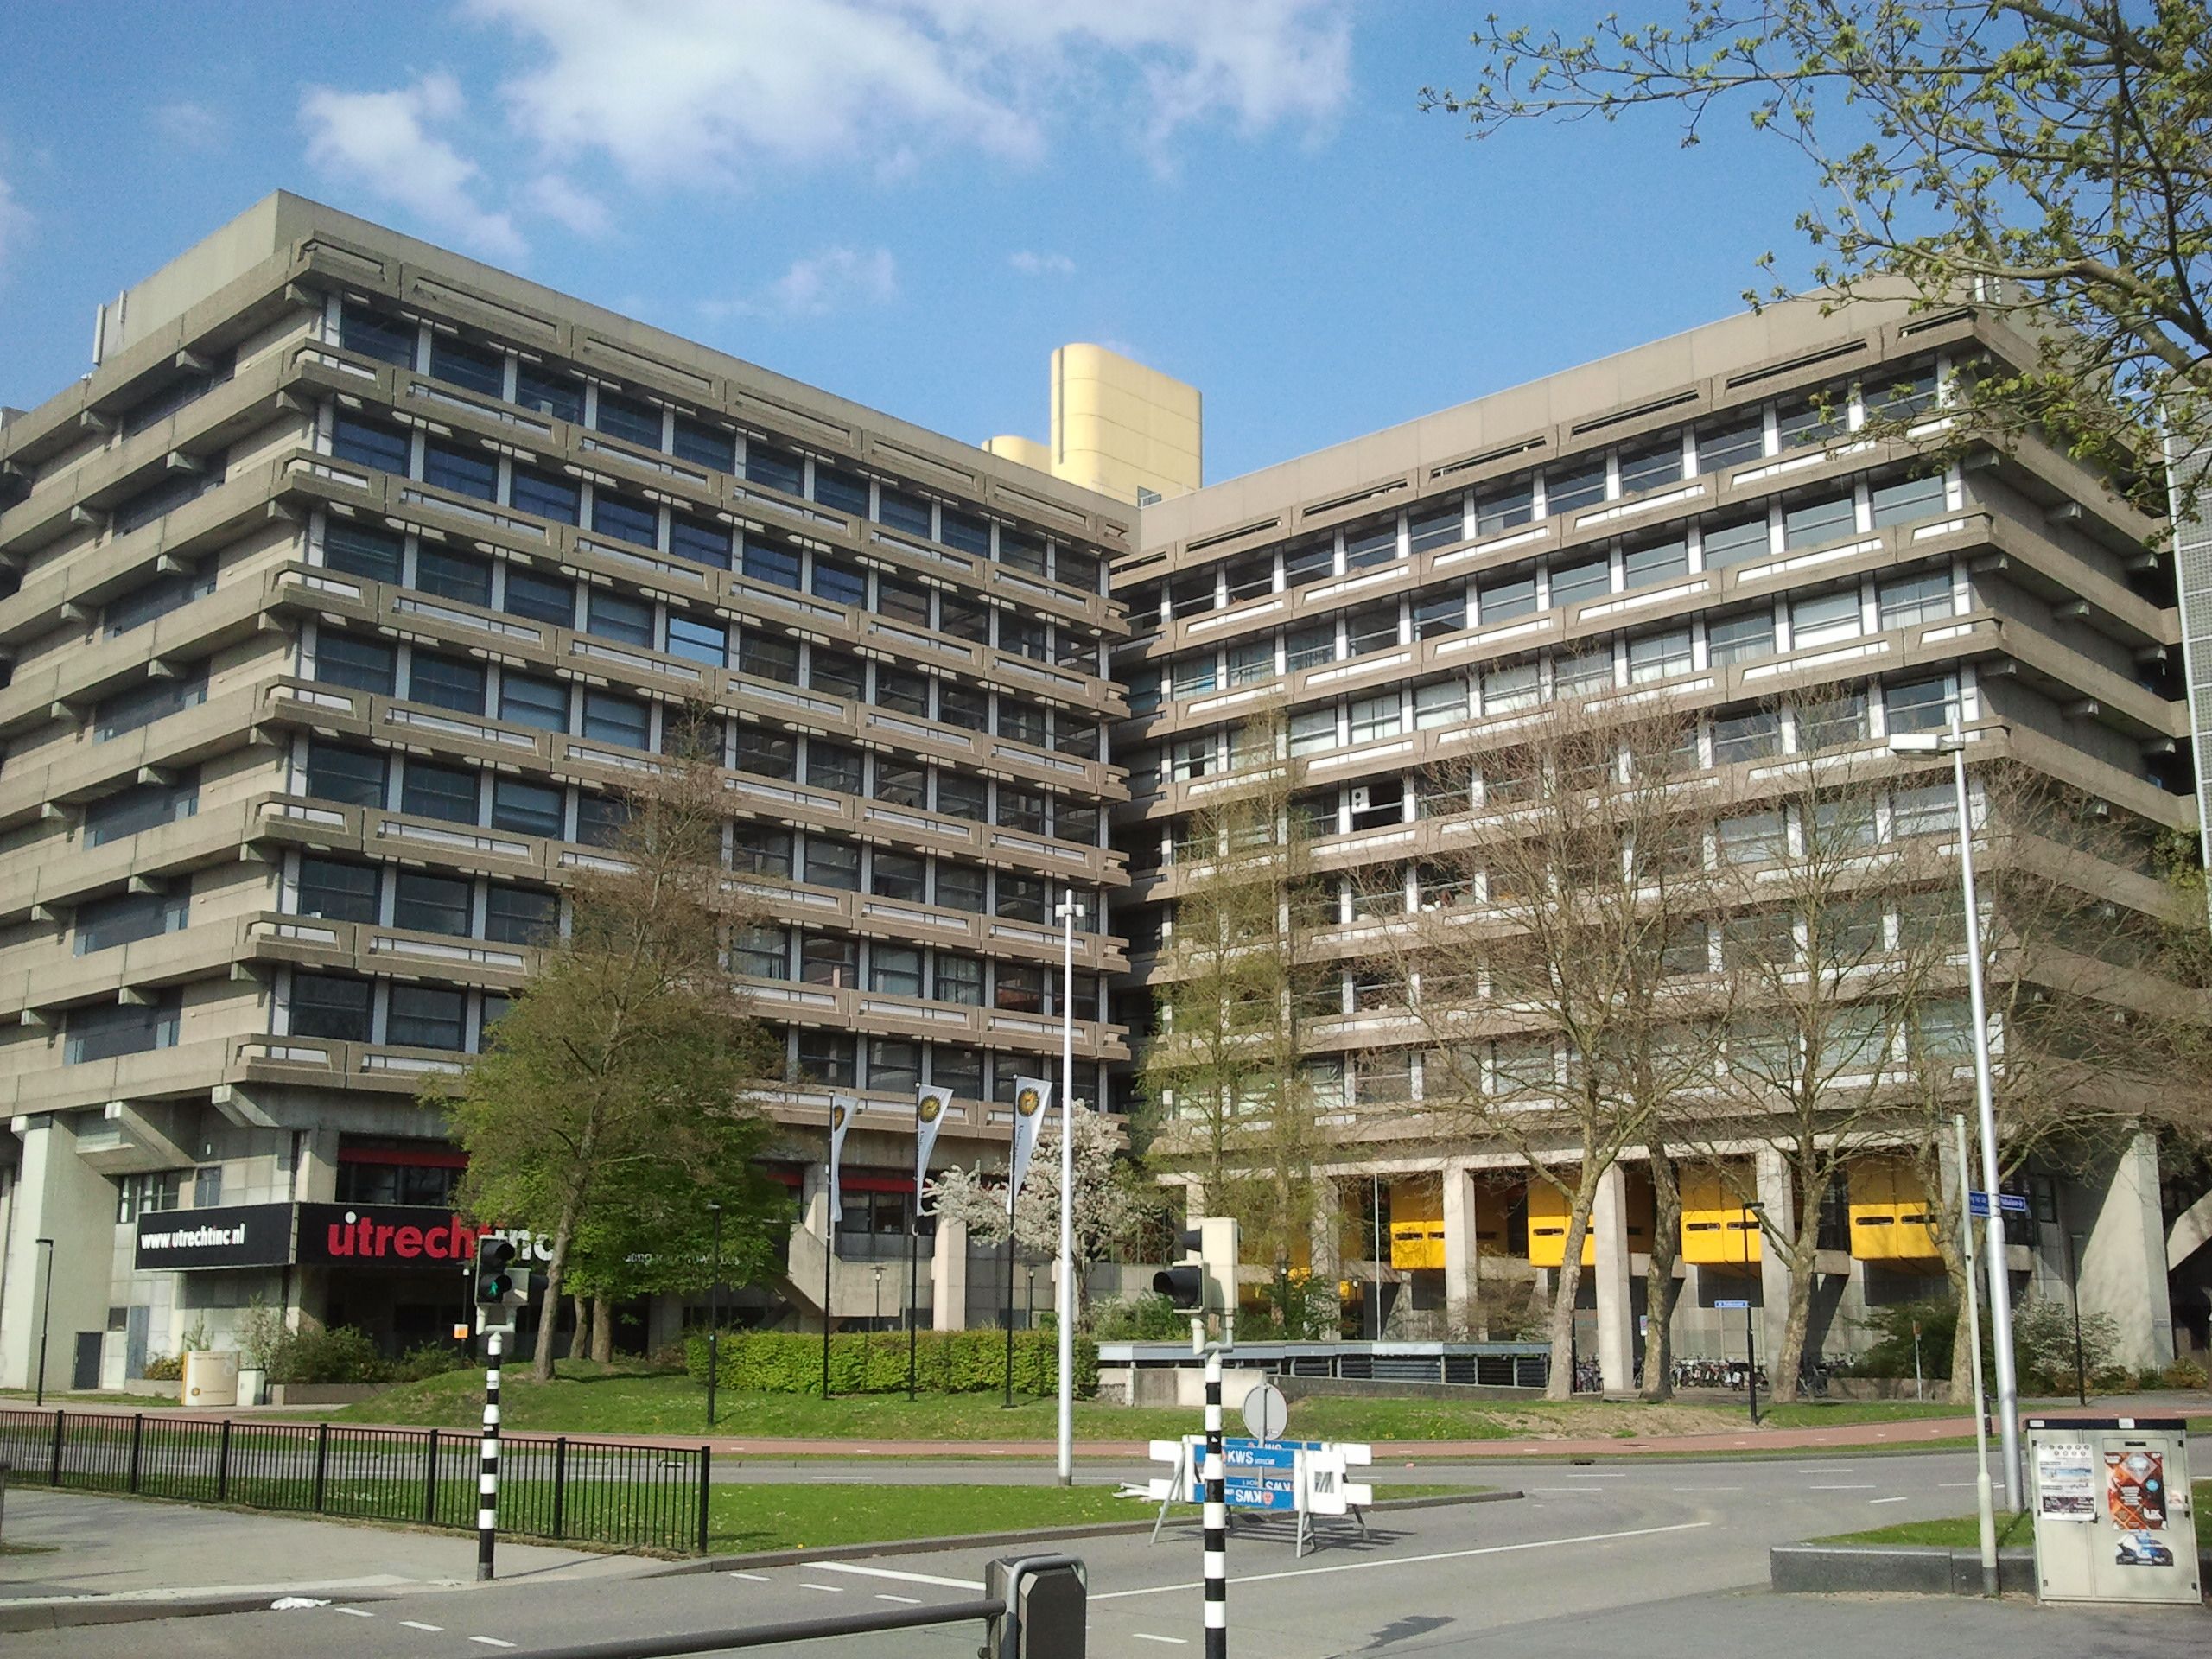 Kruytbuilding,_Utrecht_University,_Utrecht,_The_Netherlands.jpg